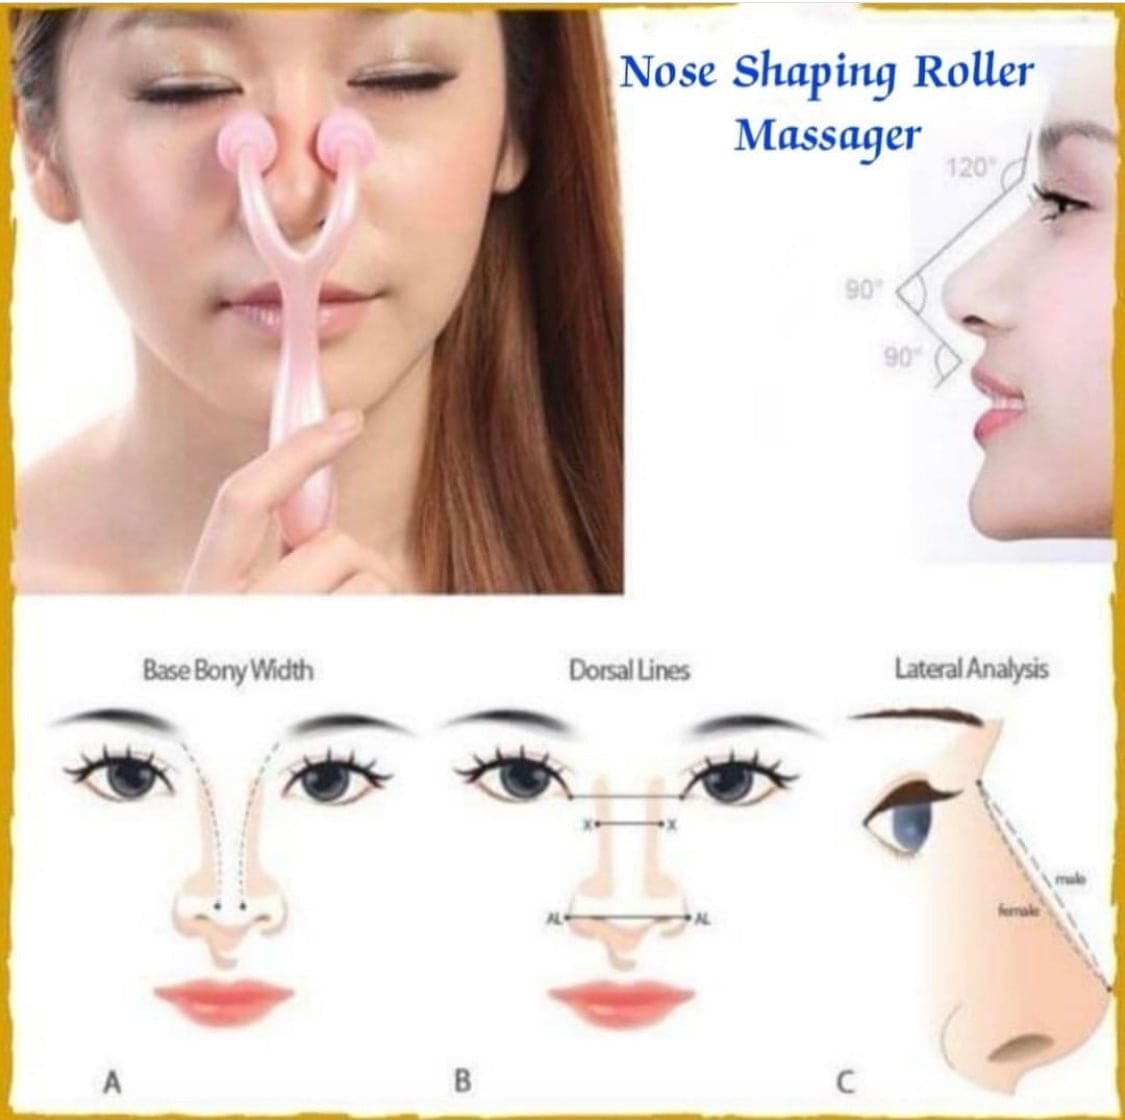 Nose Shape Roller, Beauty Nose Massager Clip, Nose Lifter Beauty Spa Health Care, Nose Massage Tools, Magic Nose Shaping Shaper, Nose Shaping Roller, Nose Slimmer